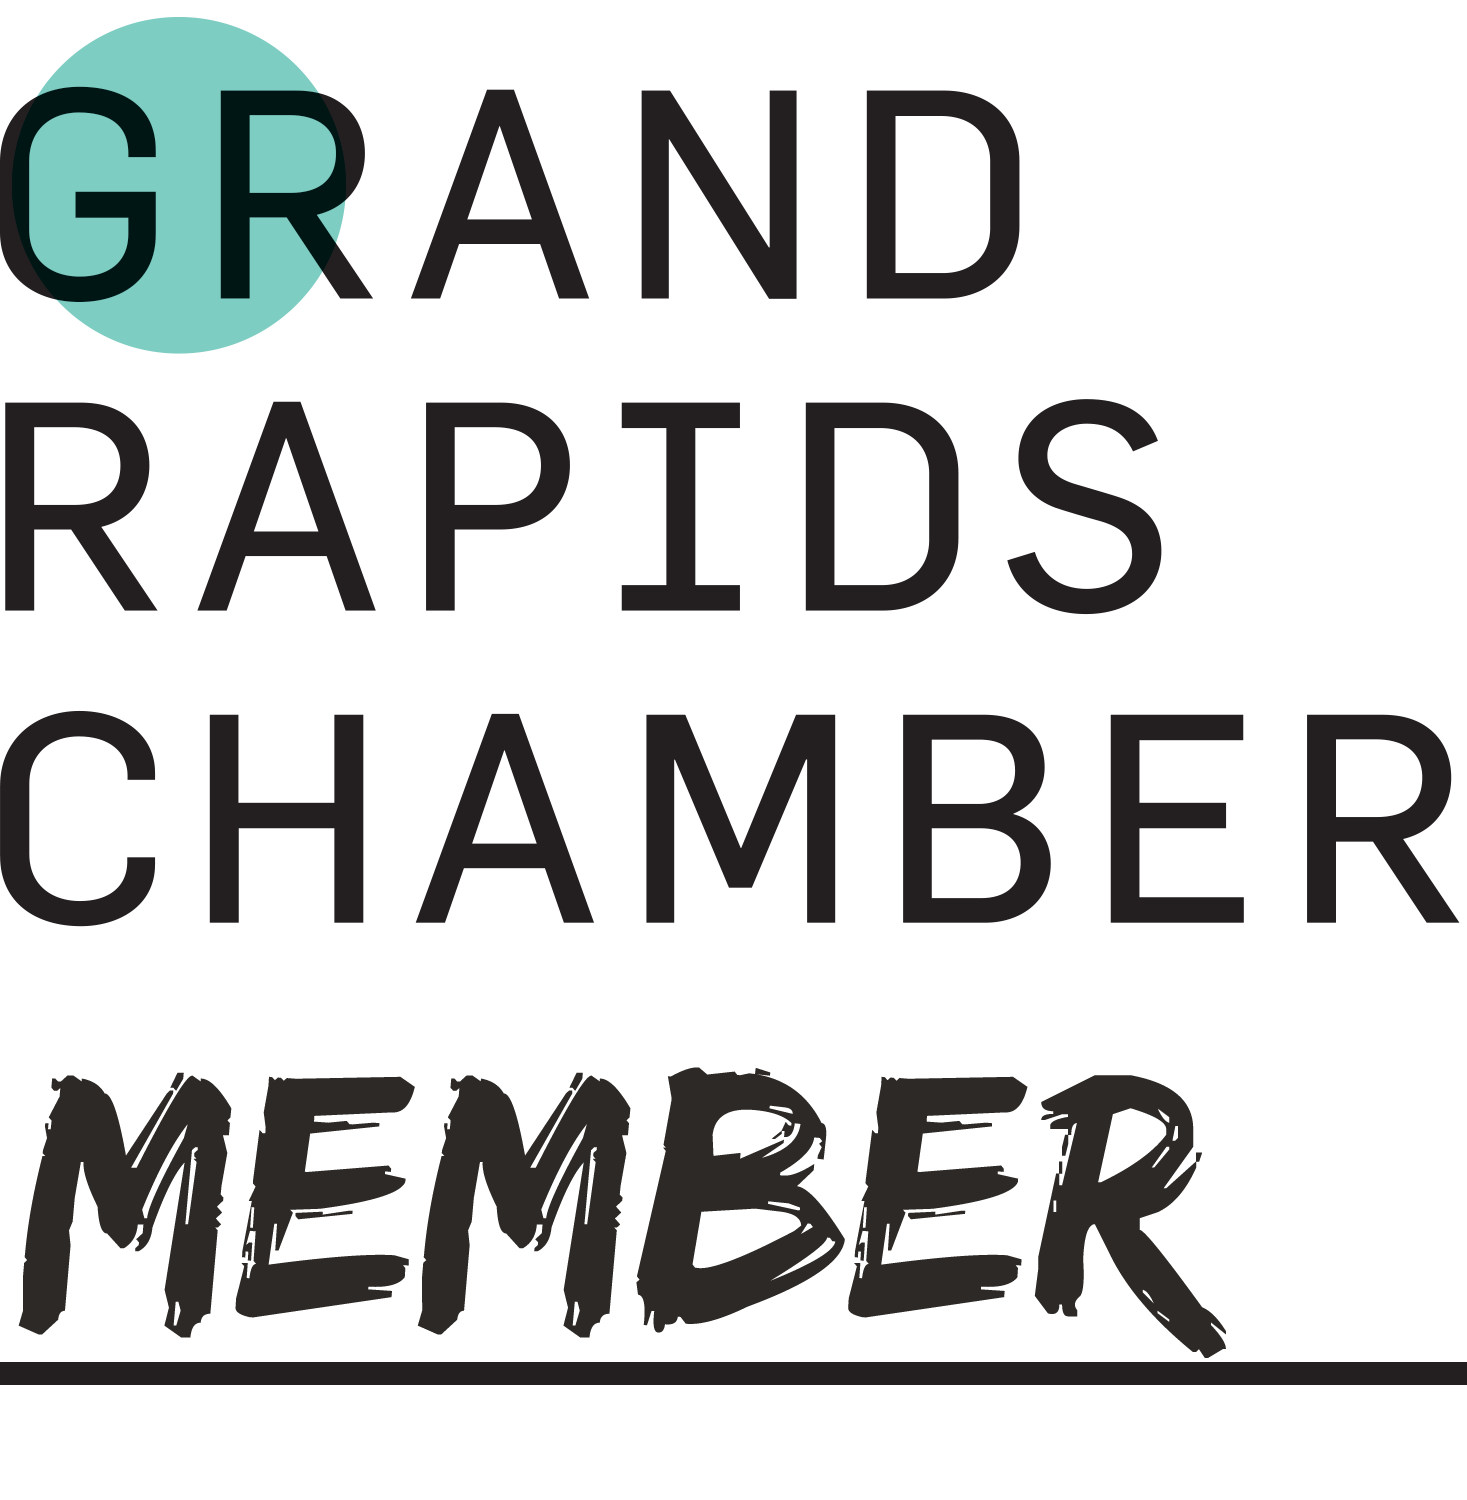 Grand Rapids Chamber of Commerce